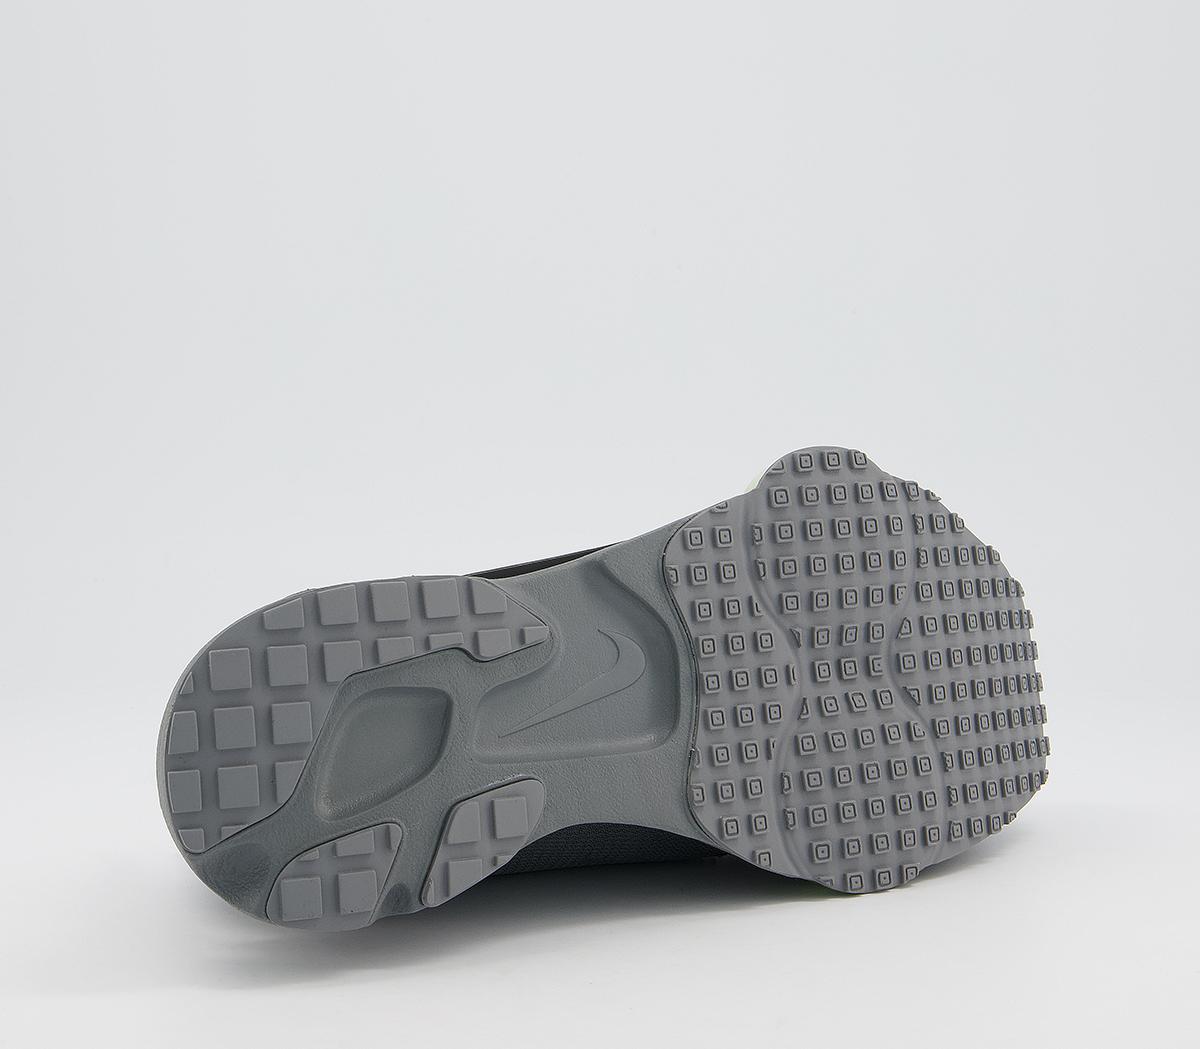 Nike Air Zoom Type Trainers Smoke Grey Dark Grey Volt Black - His trainers